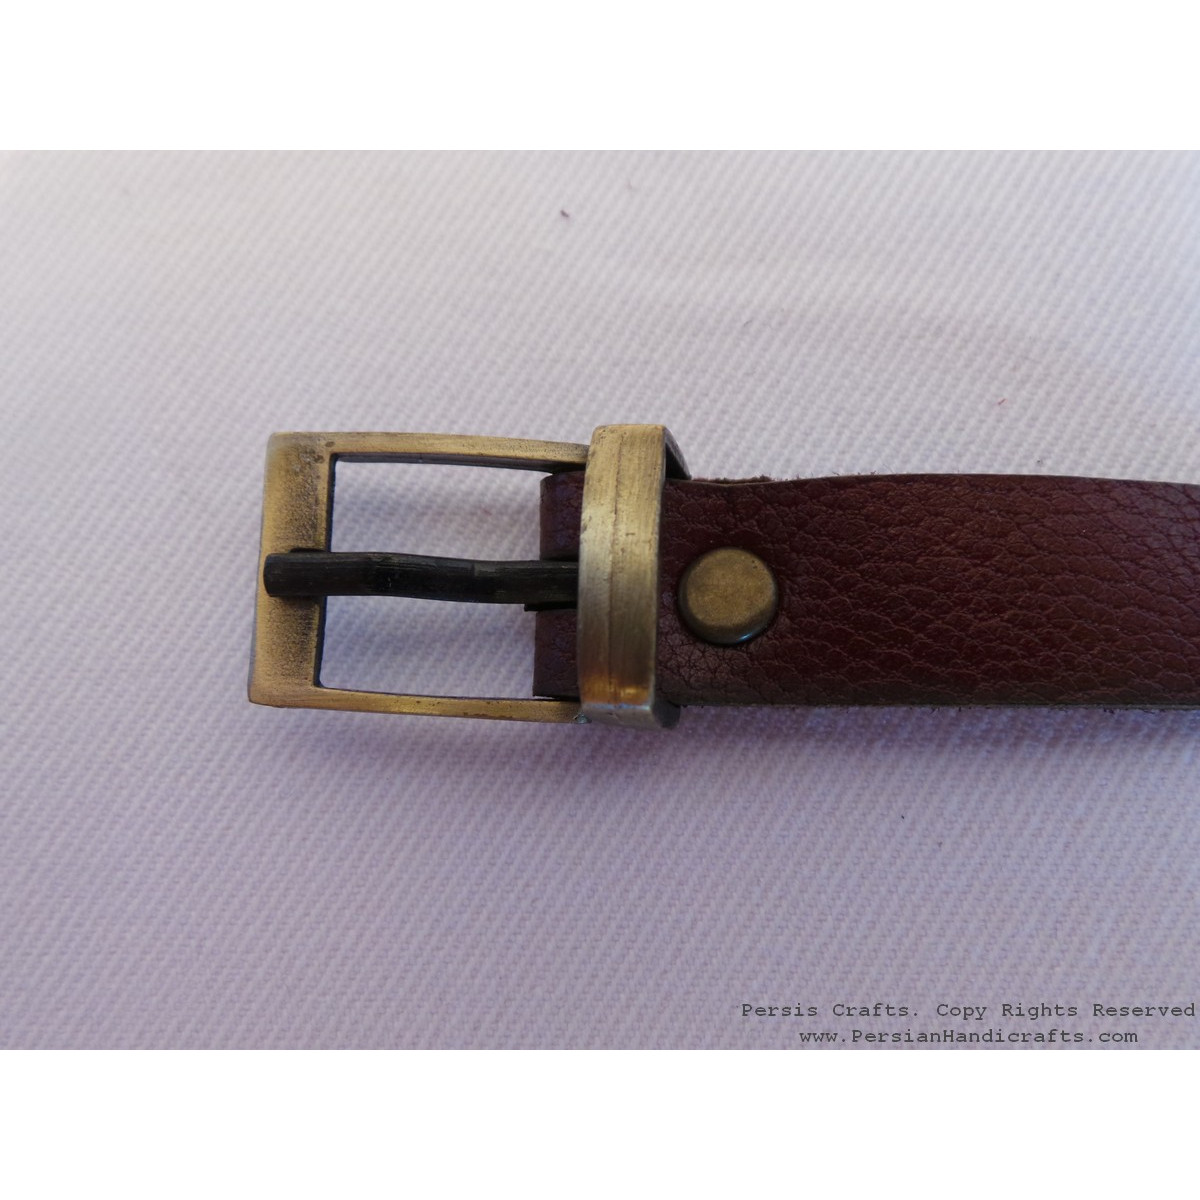 Enamel Minakari Leather Bracelet - HA3037-Persian Handicrafts